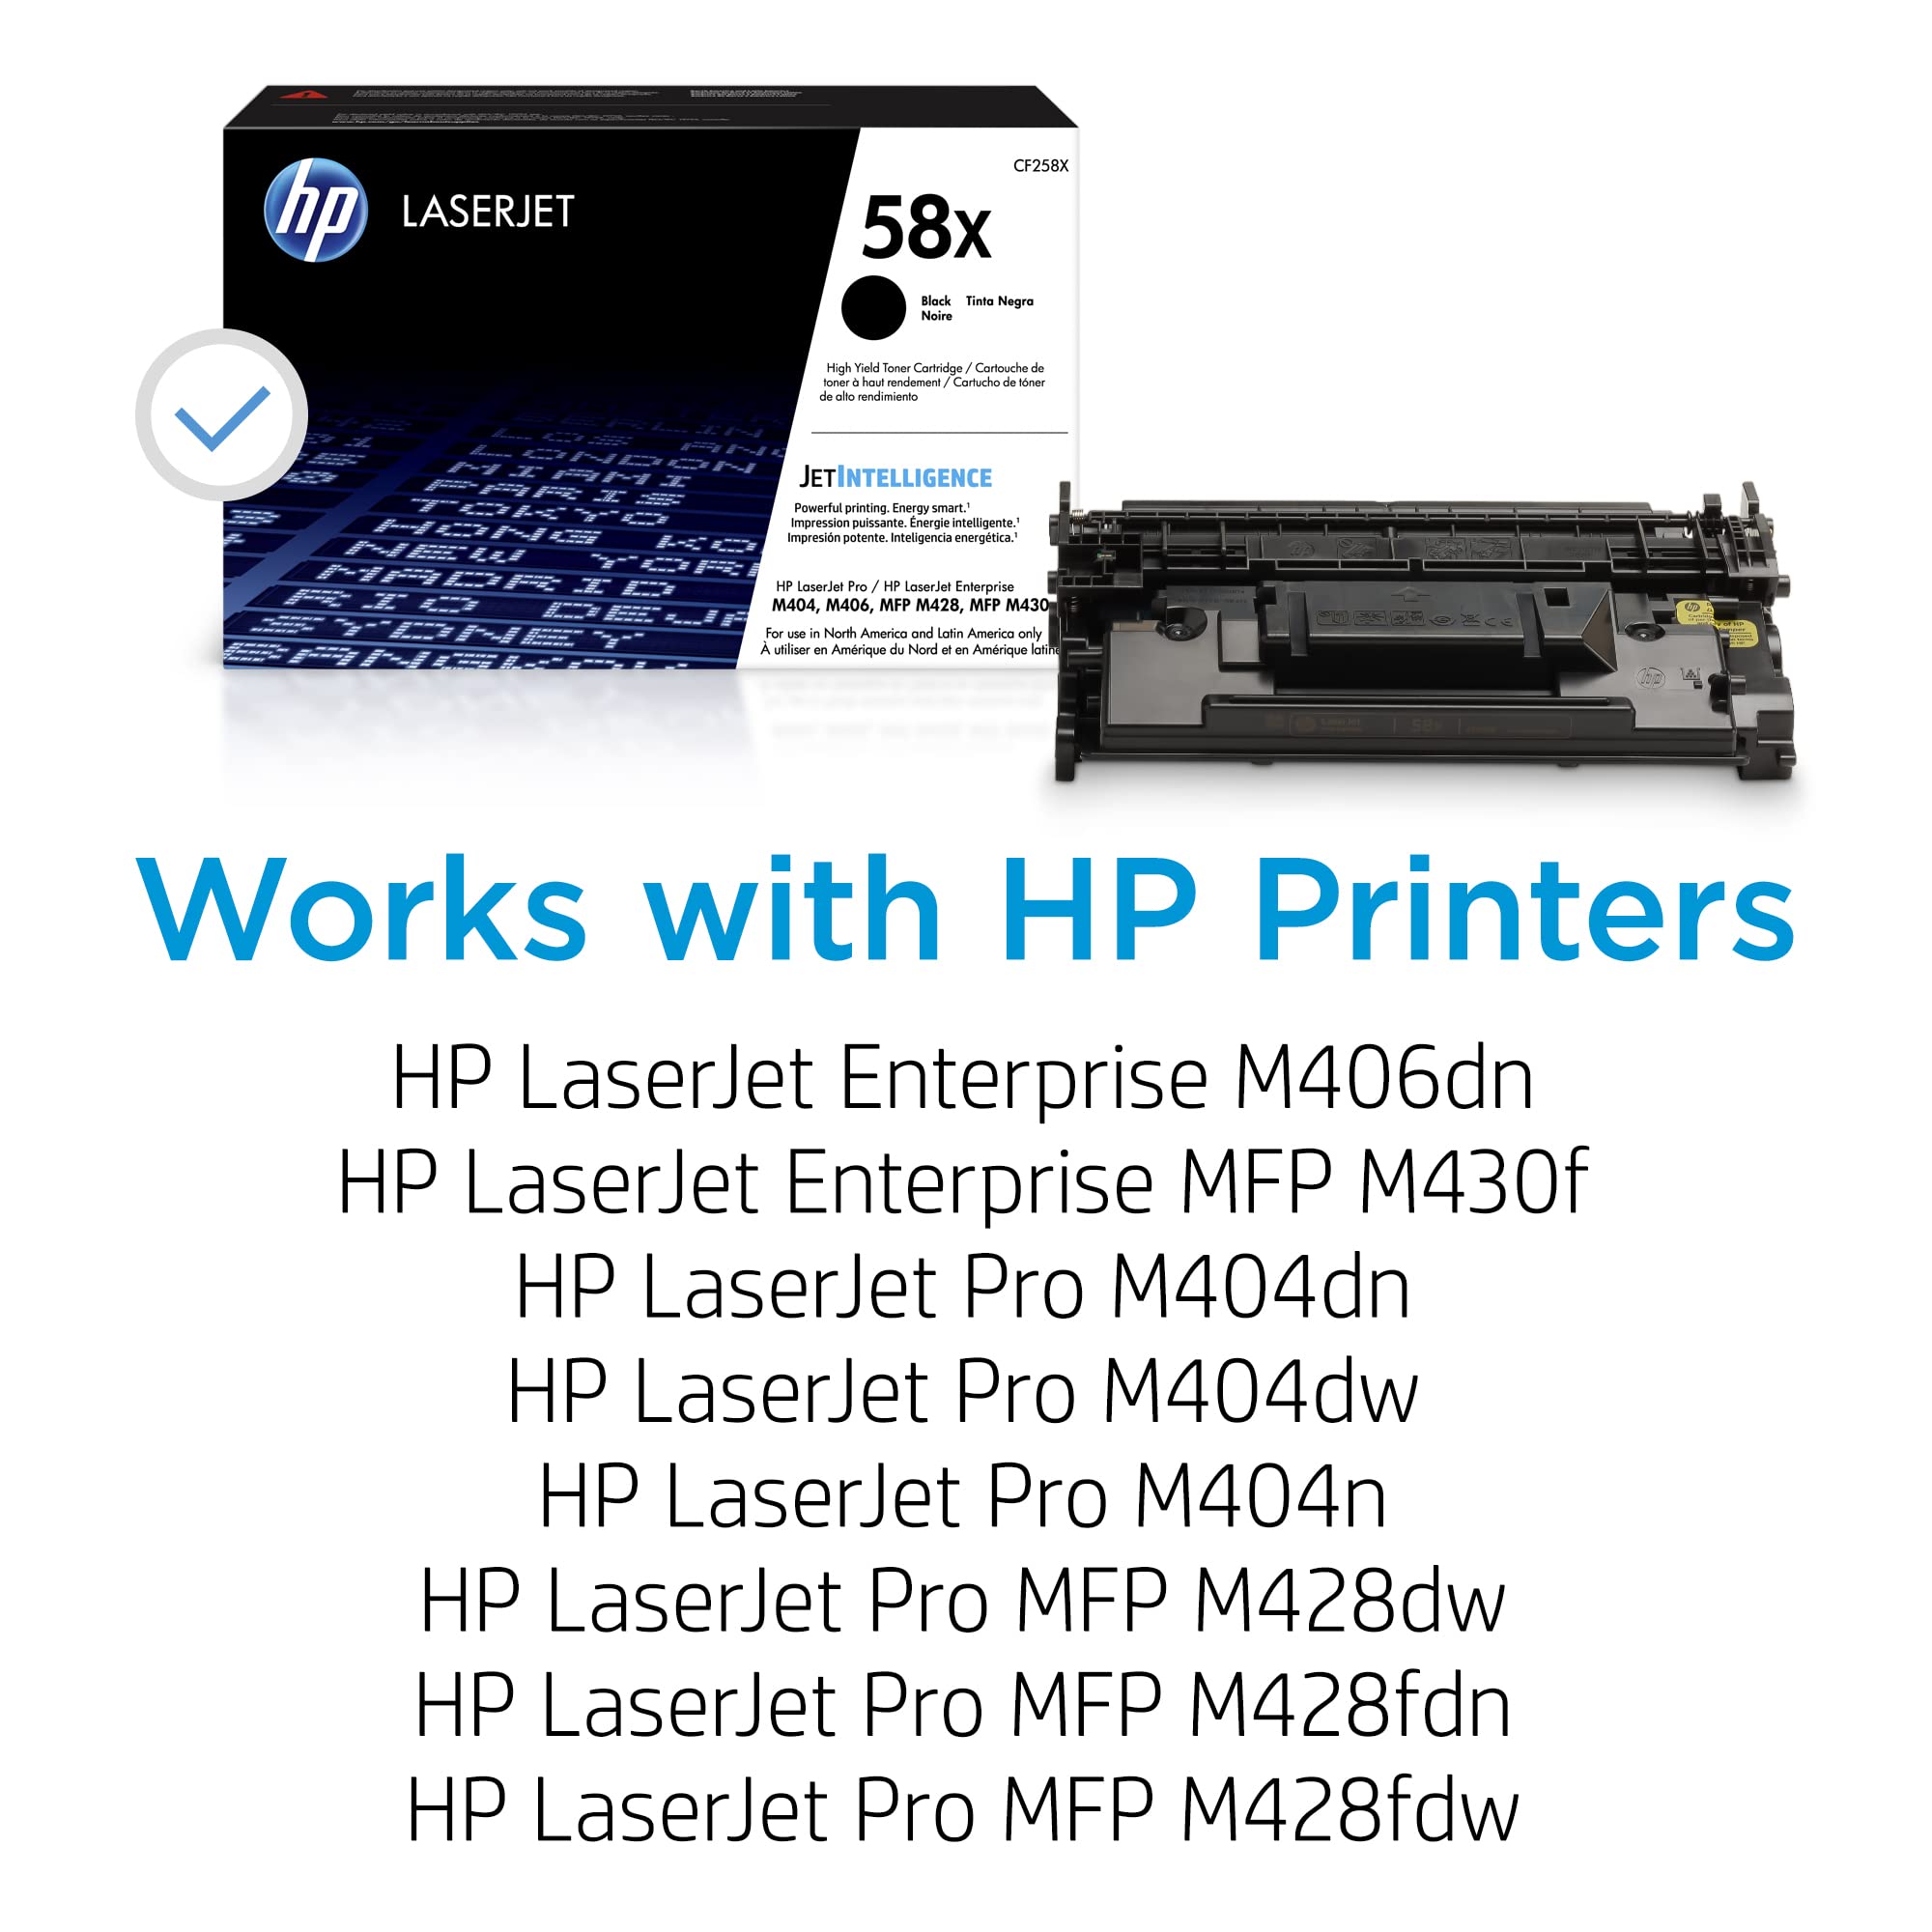 HP 58X Black High-yield Toner Cartridge | Works with HP LaserJet Enterprise M406dn, HP LaserJet Enterprise MFP M430f, HP LaserJet Pro M404 Series, HP LaserJet Pro MFP M428 Series | CF258X